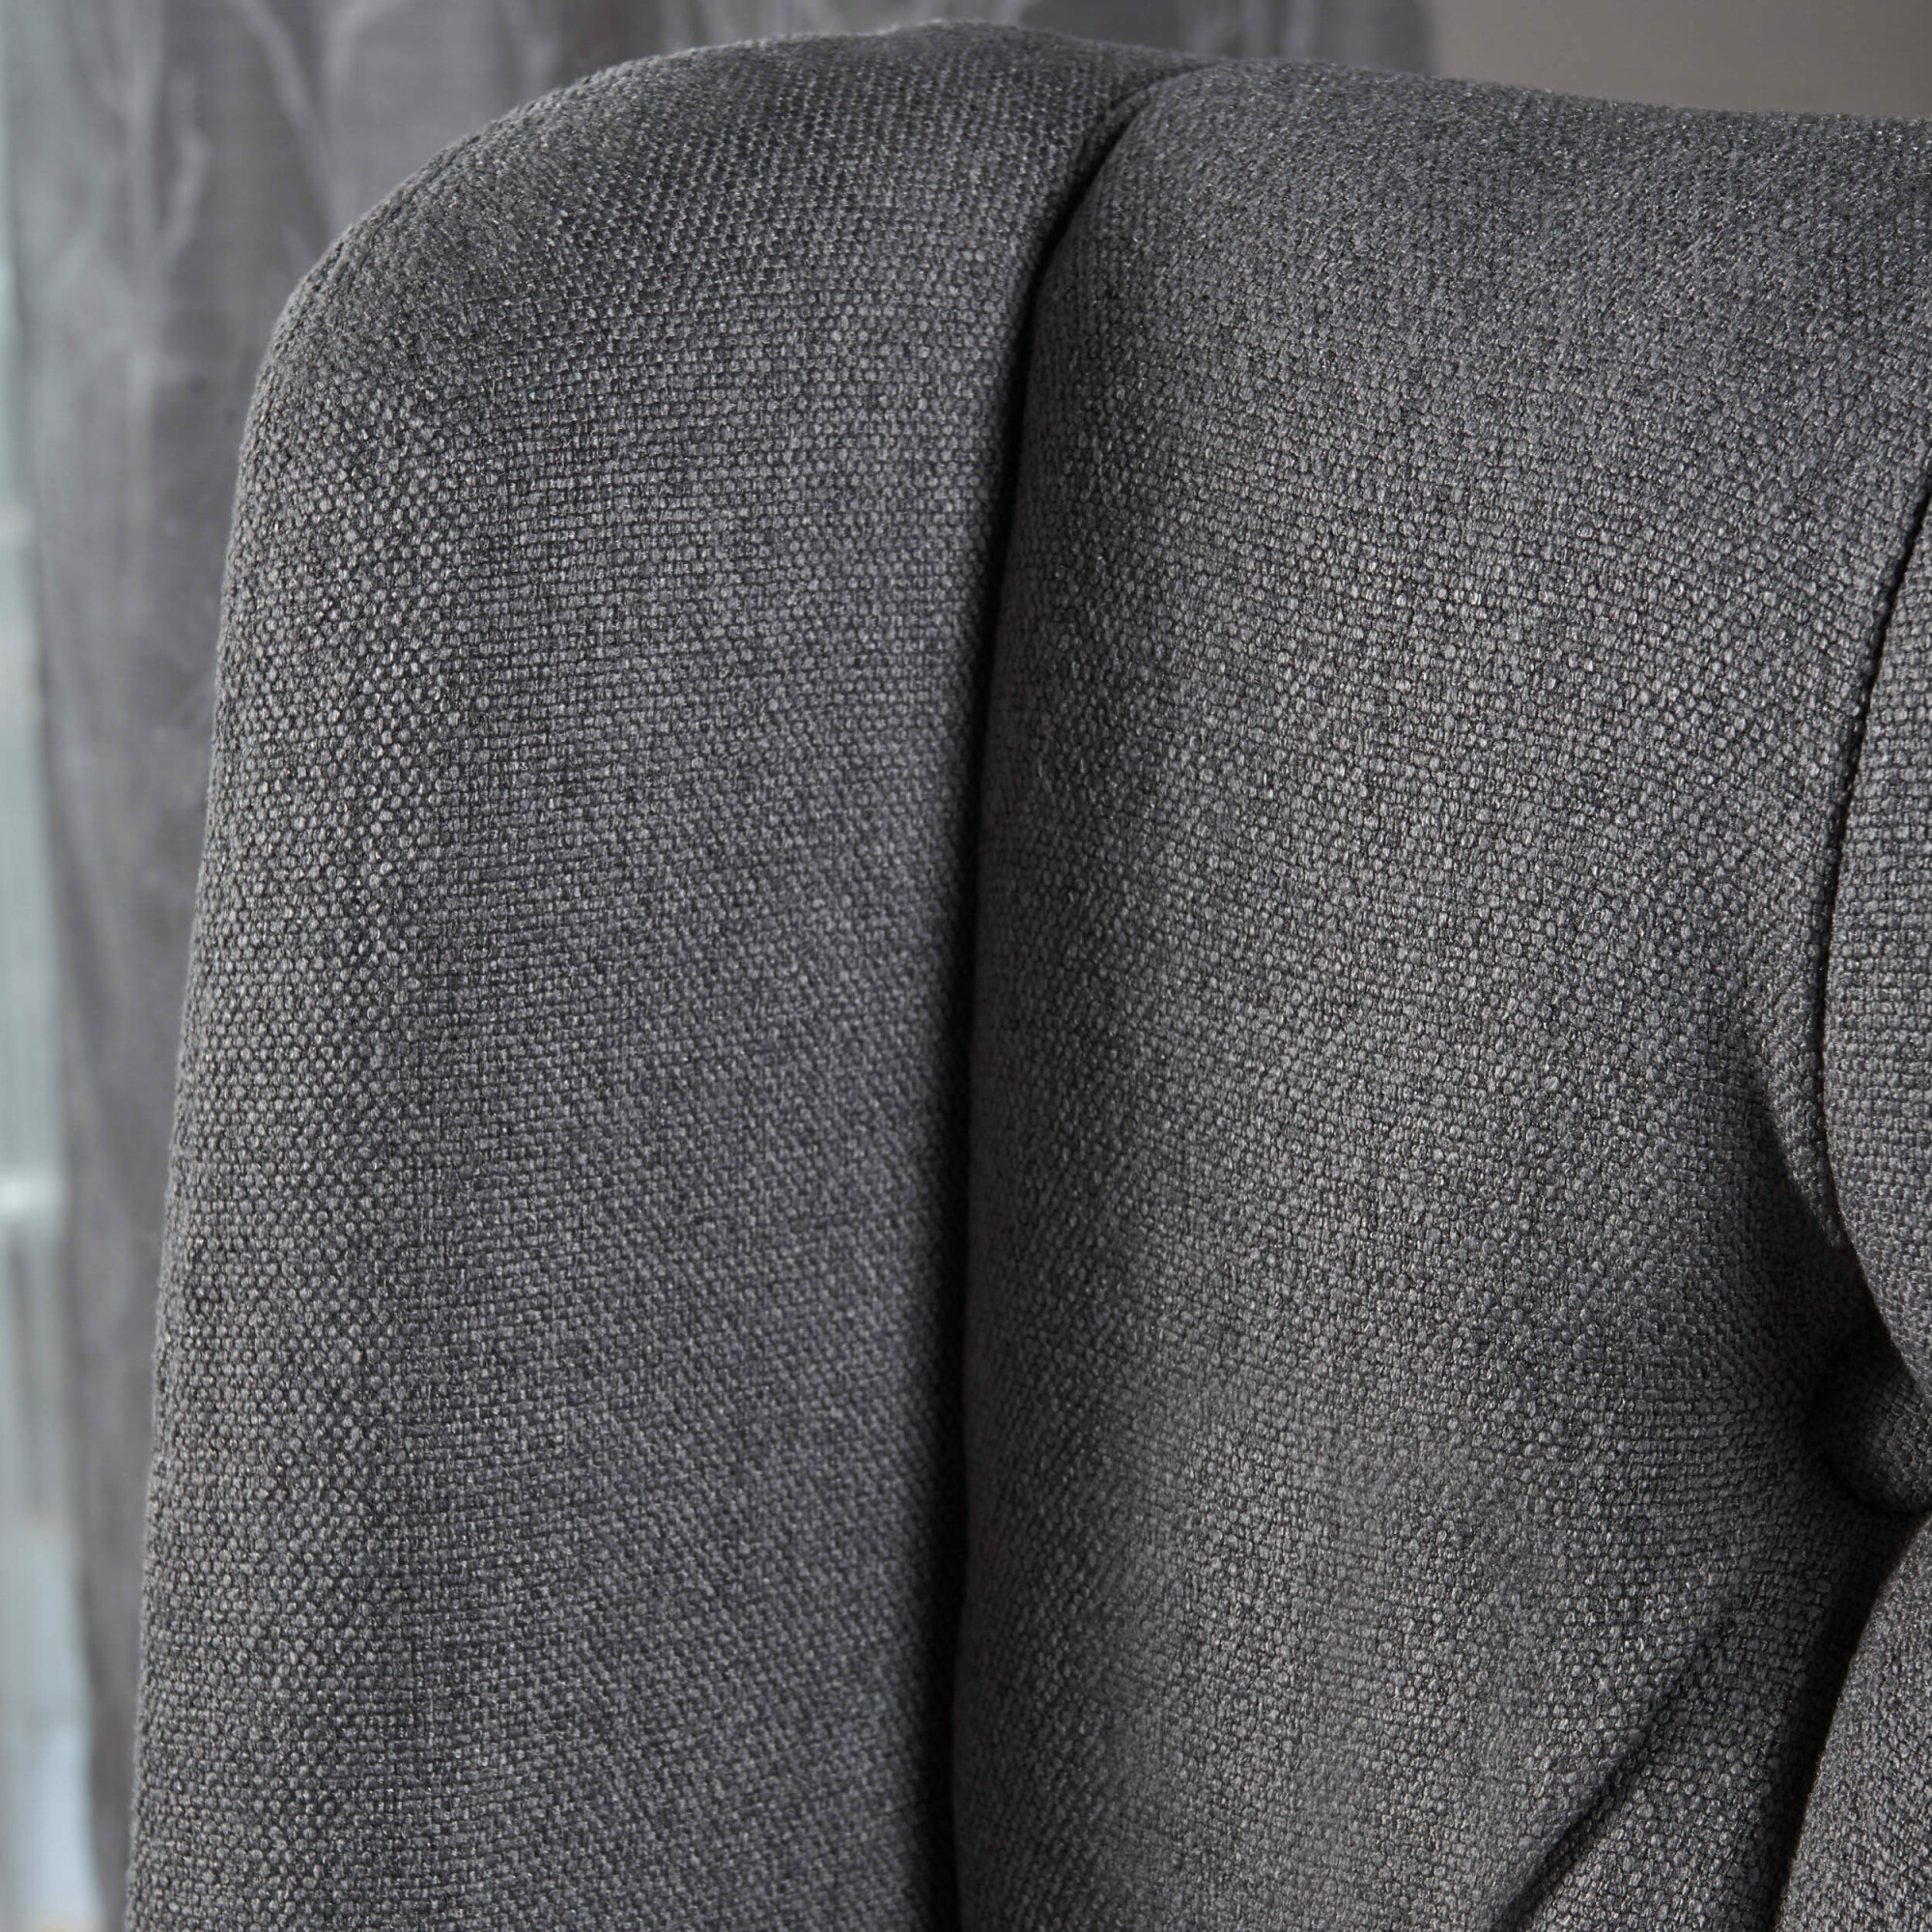 Blythe Tufted Dark Grey Fabric Dining Chairs (Set of 2) in Dark Grey ...